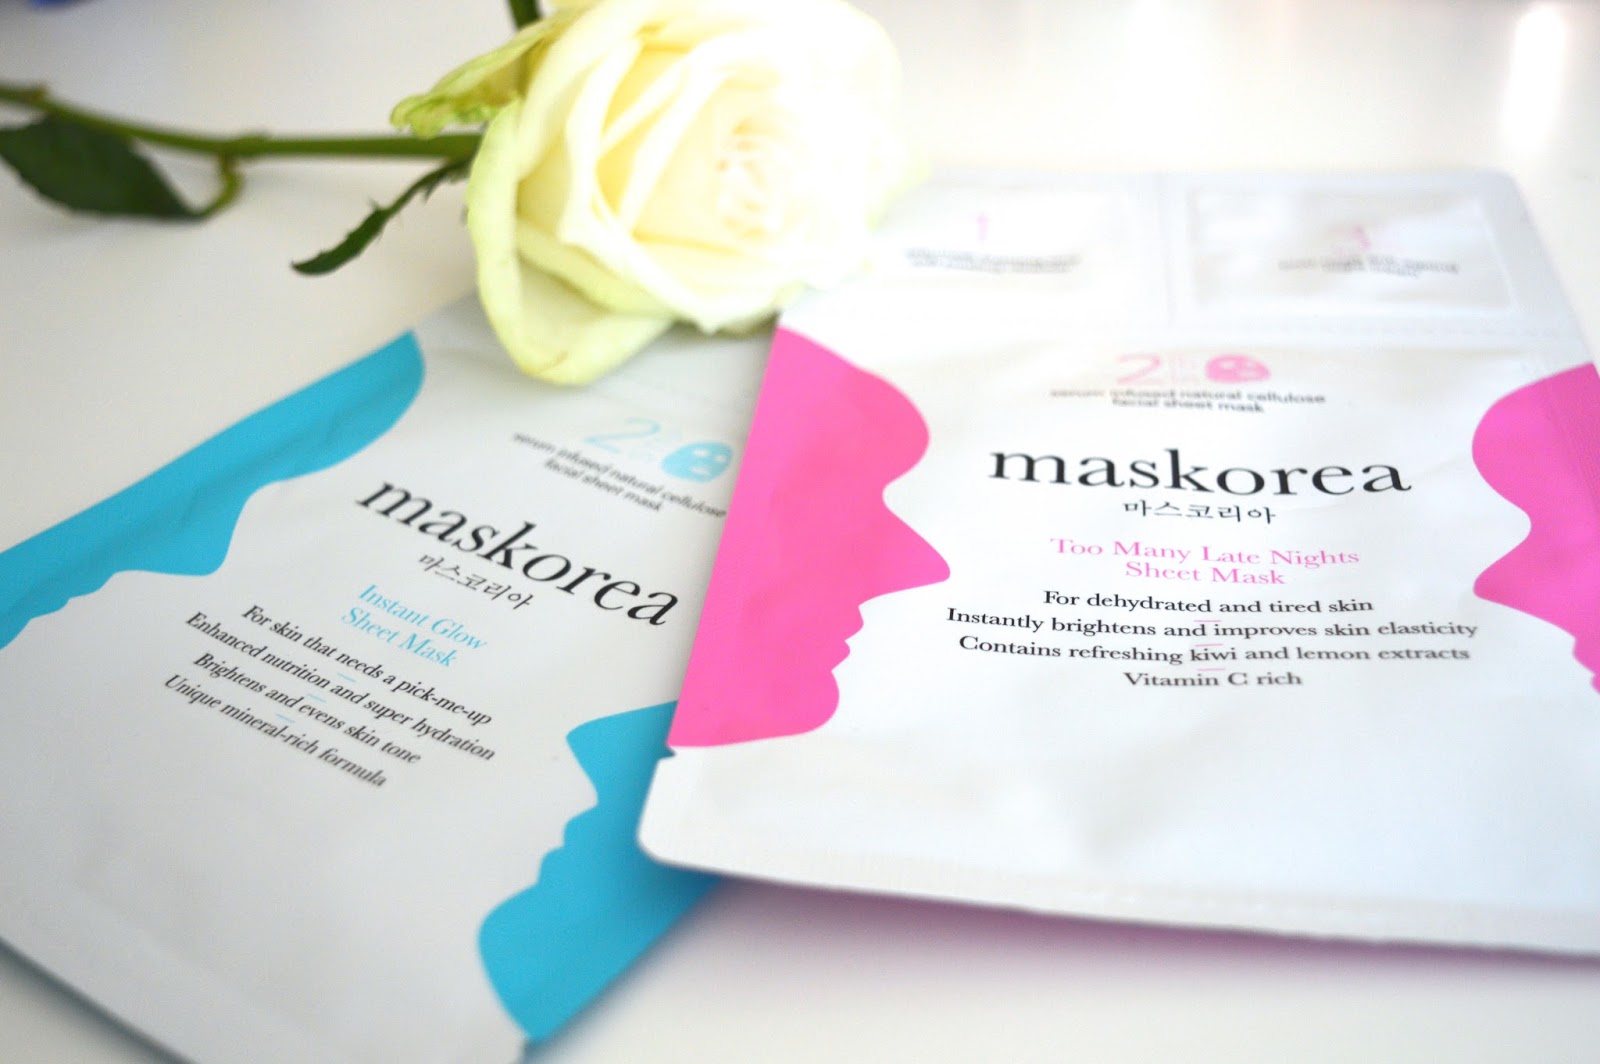 Maskorea Instant Glow Mask Review, Maskorea sheet mask review, beauty bloggers UK, UK beauty blog